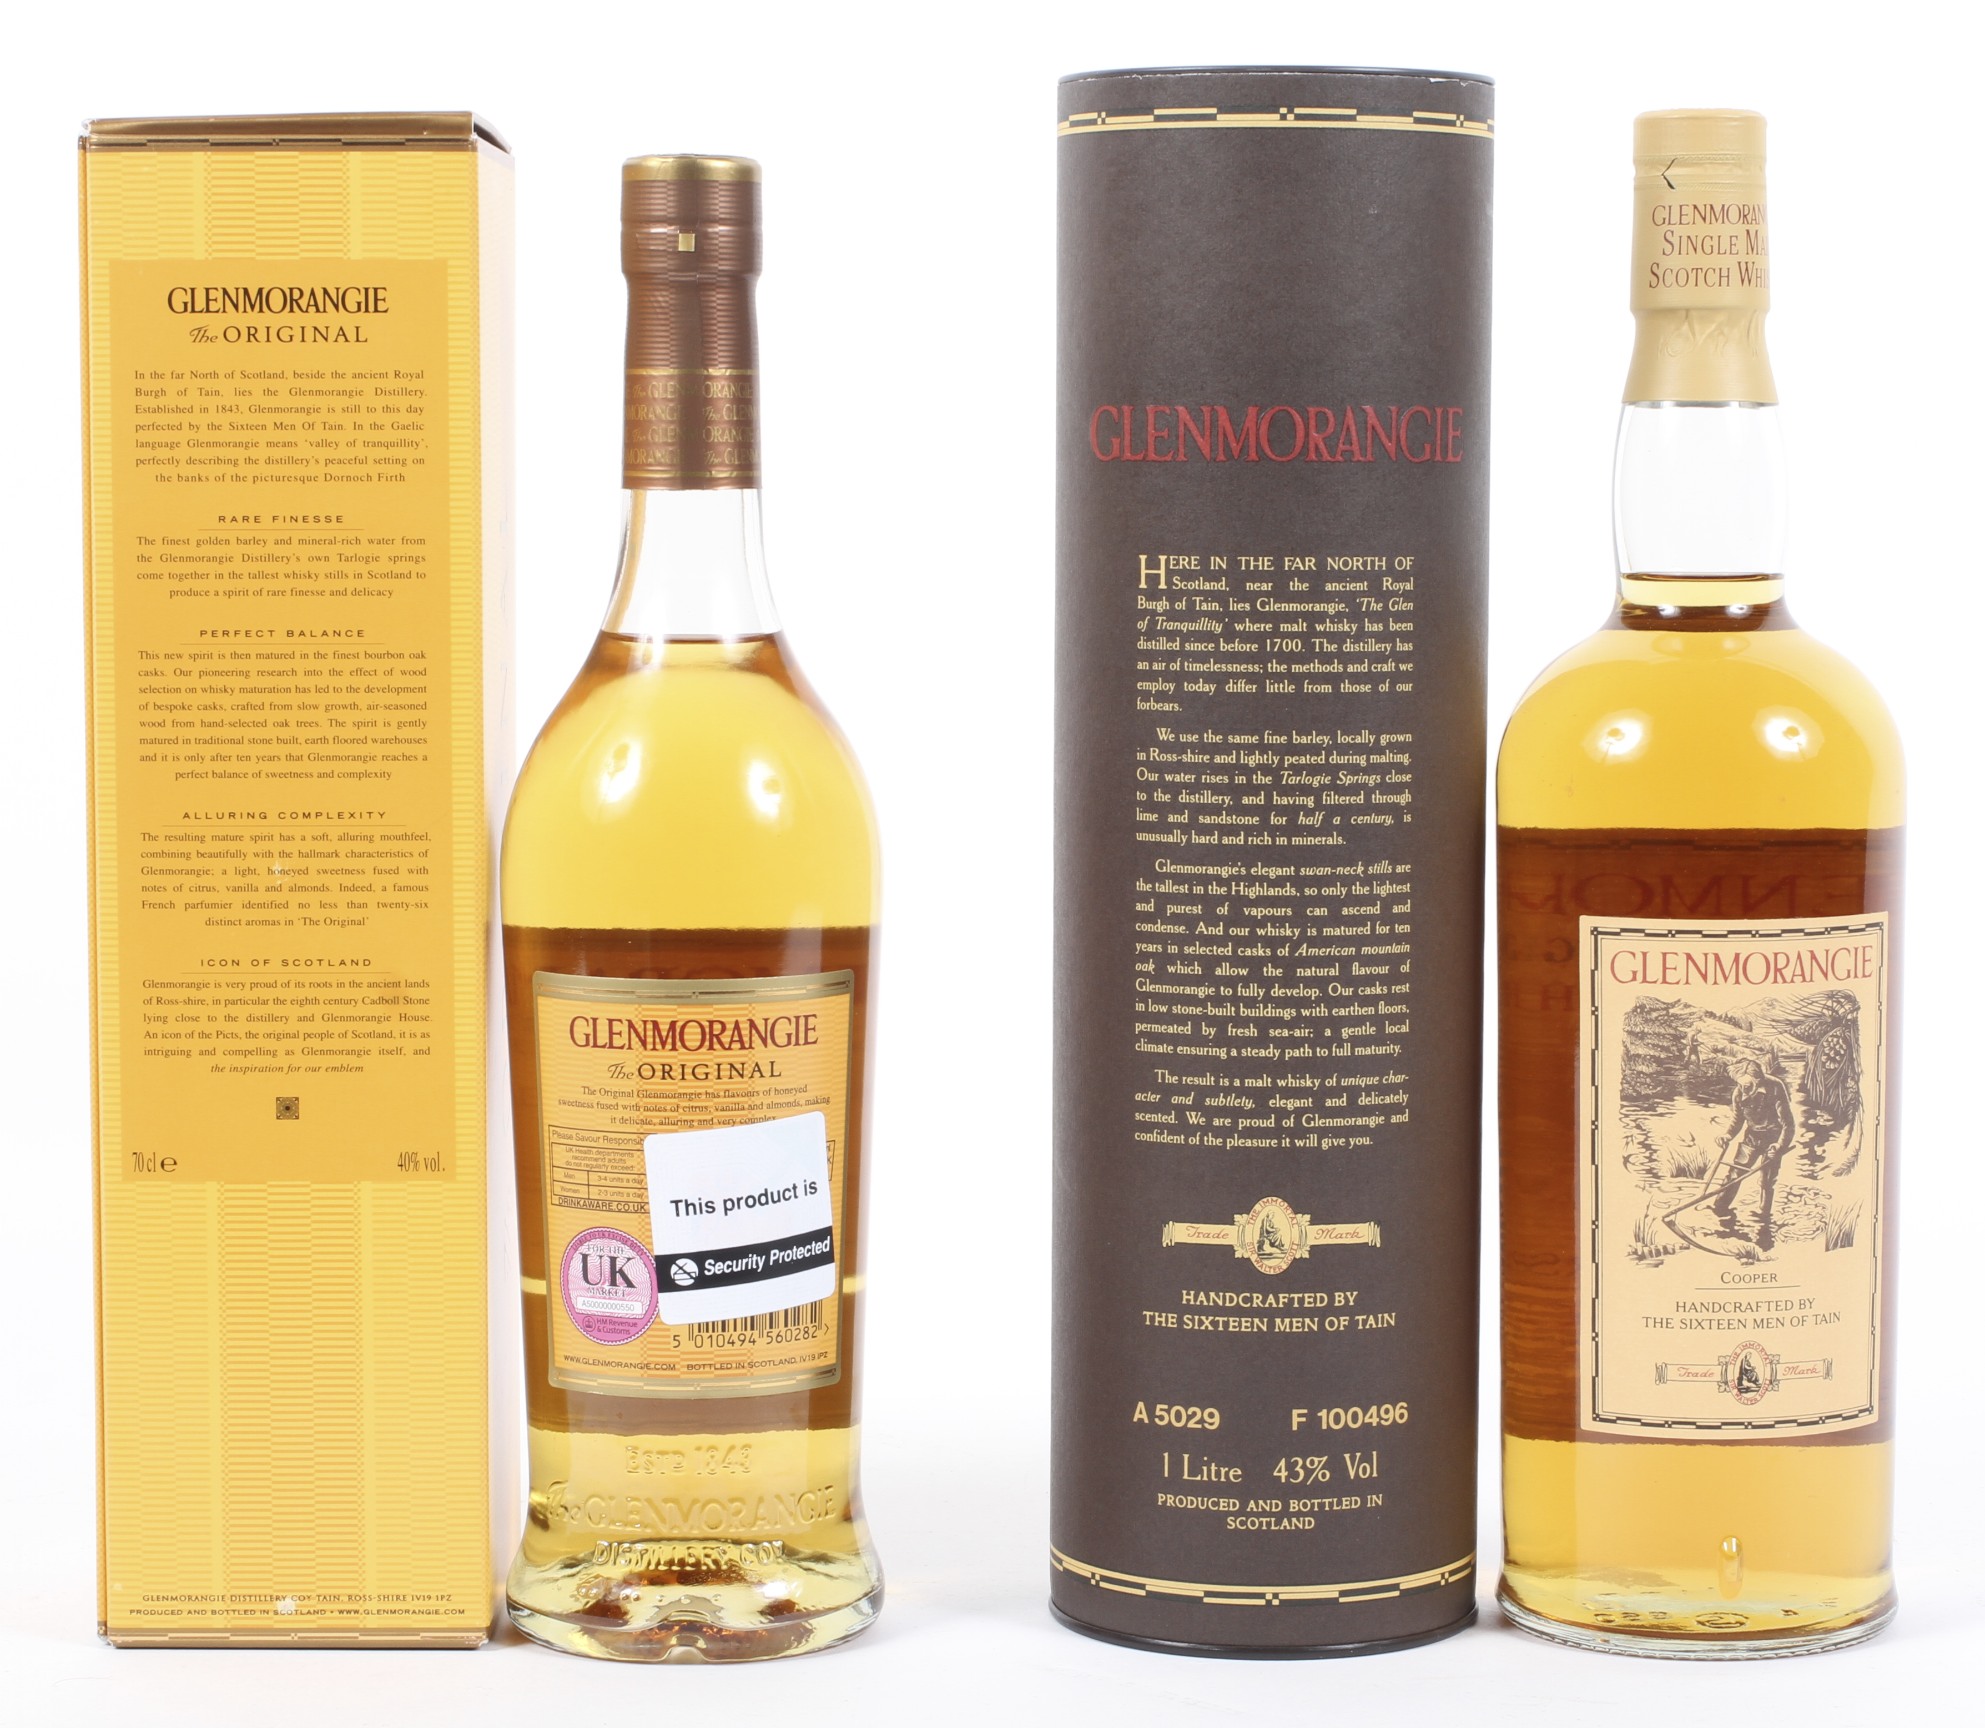 Glenmorangie Single Highland Malt Scotch Whisky, Ten Years Old, duty free, 1 Litre, 43%, - Image 2 of 2